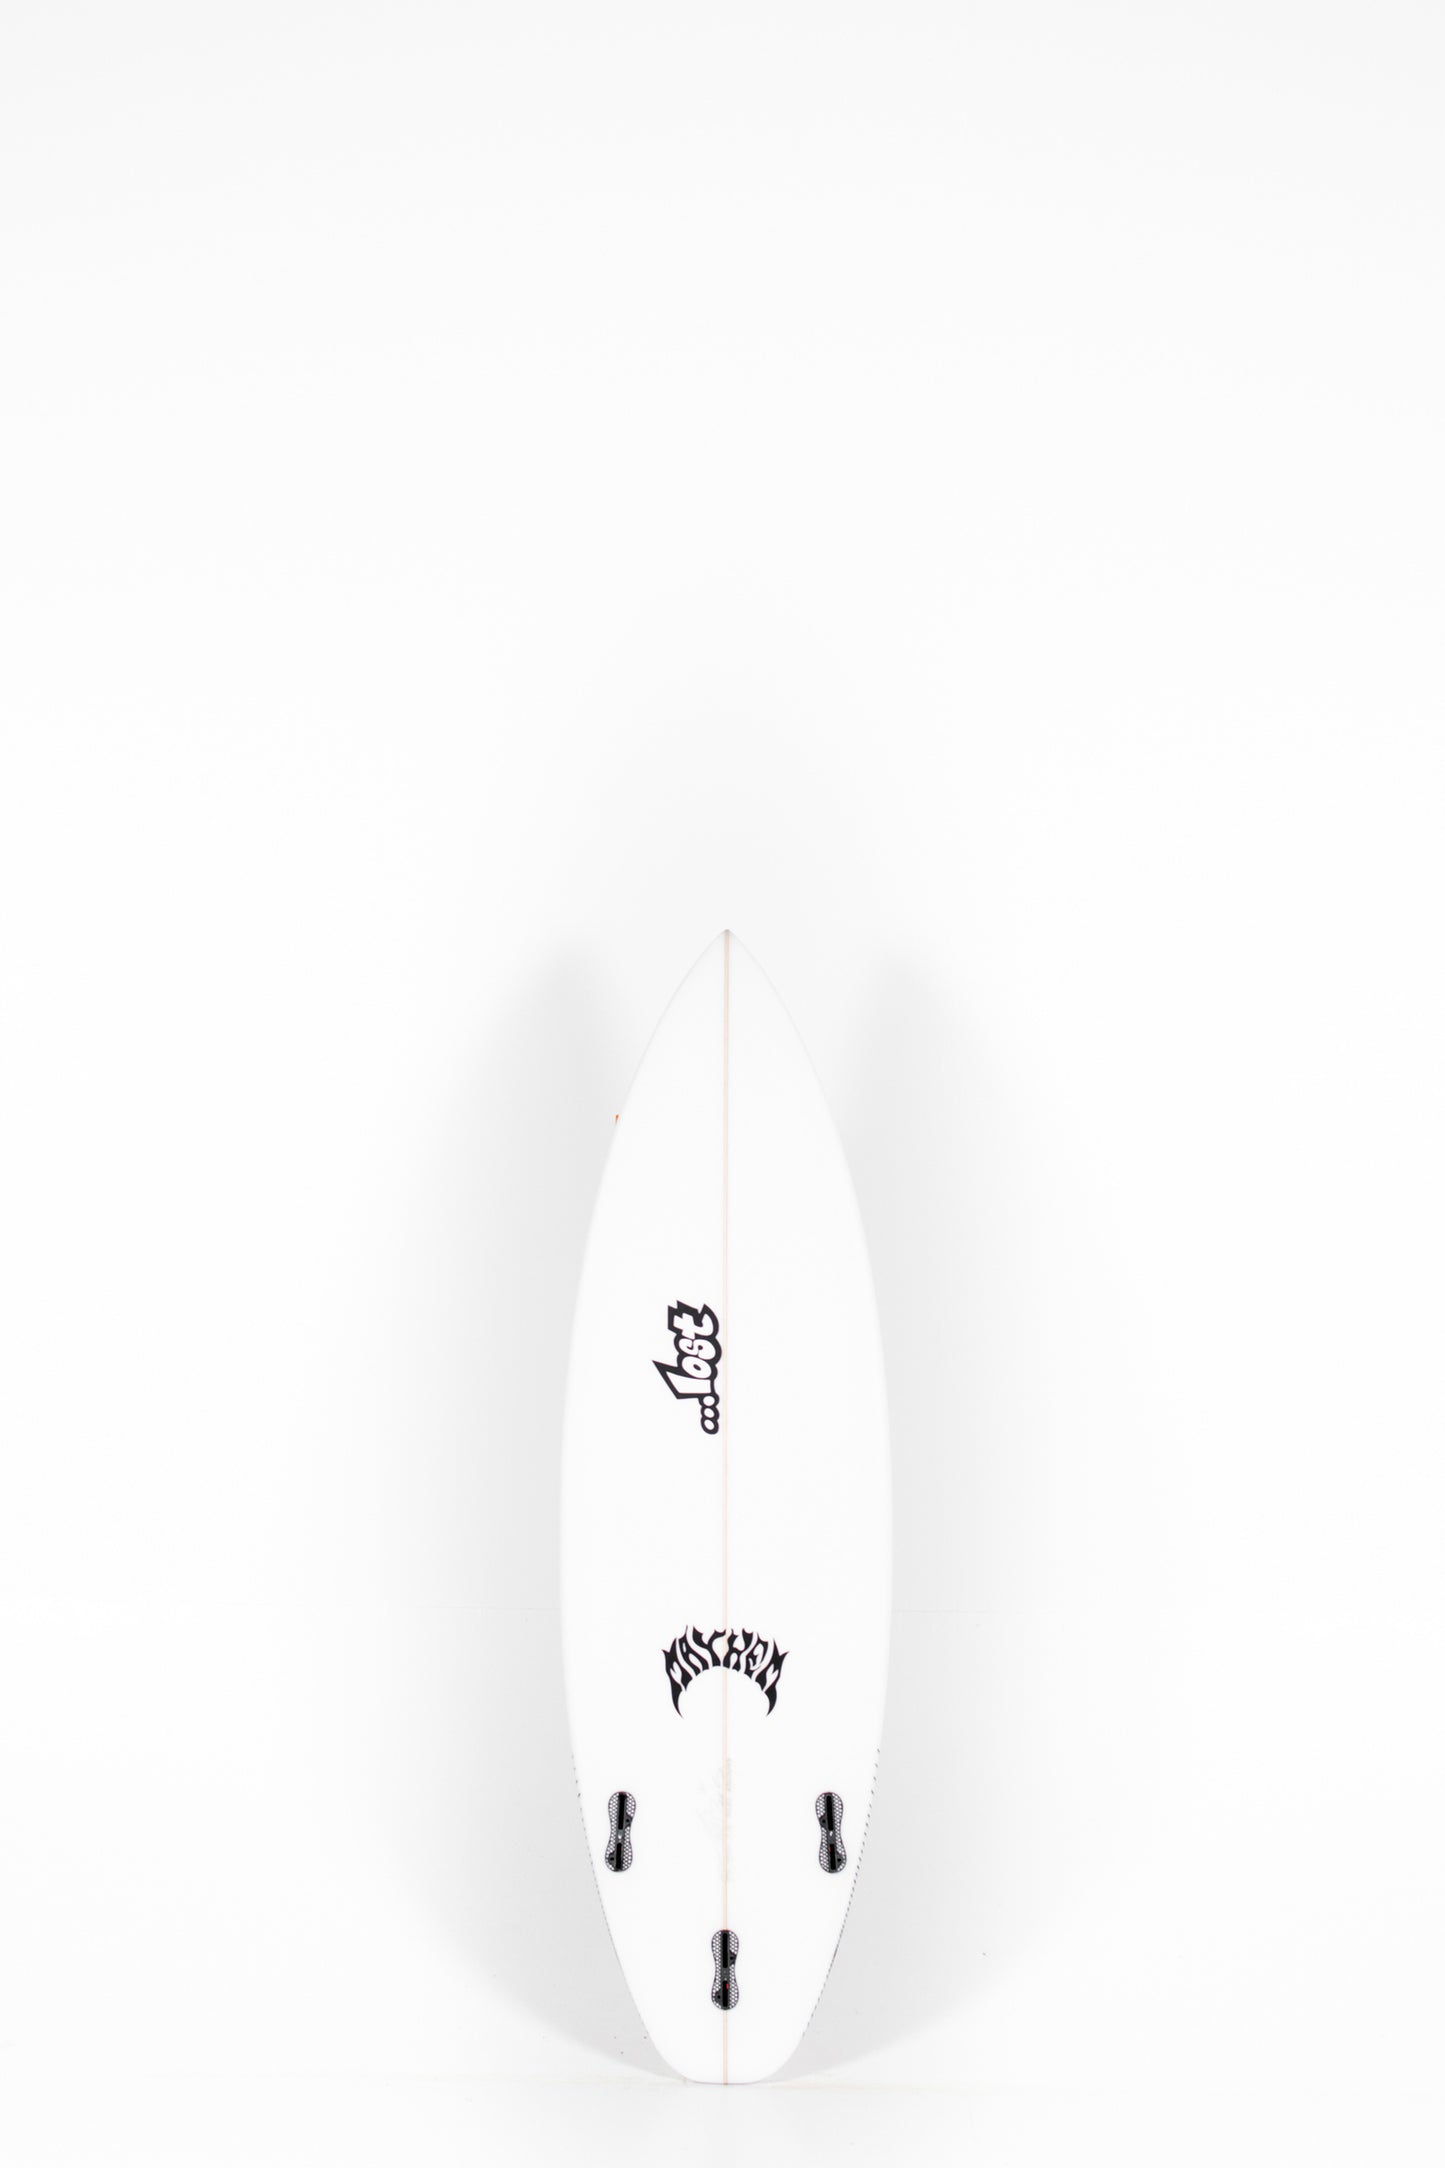 Pukas Surf Shop - Lost Surfboard - POCKET ROCKET GROM by Matt Biolos - 5’2” x 17,75 x 2,13 x 20,5L - MH12697